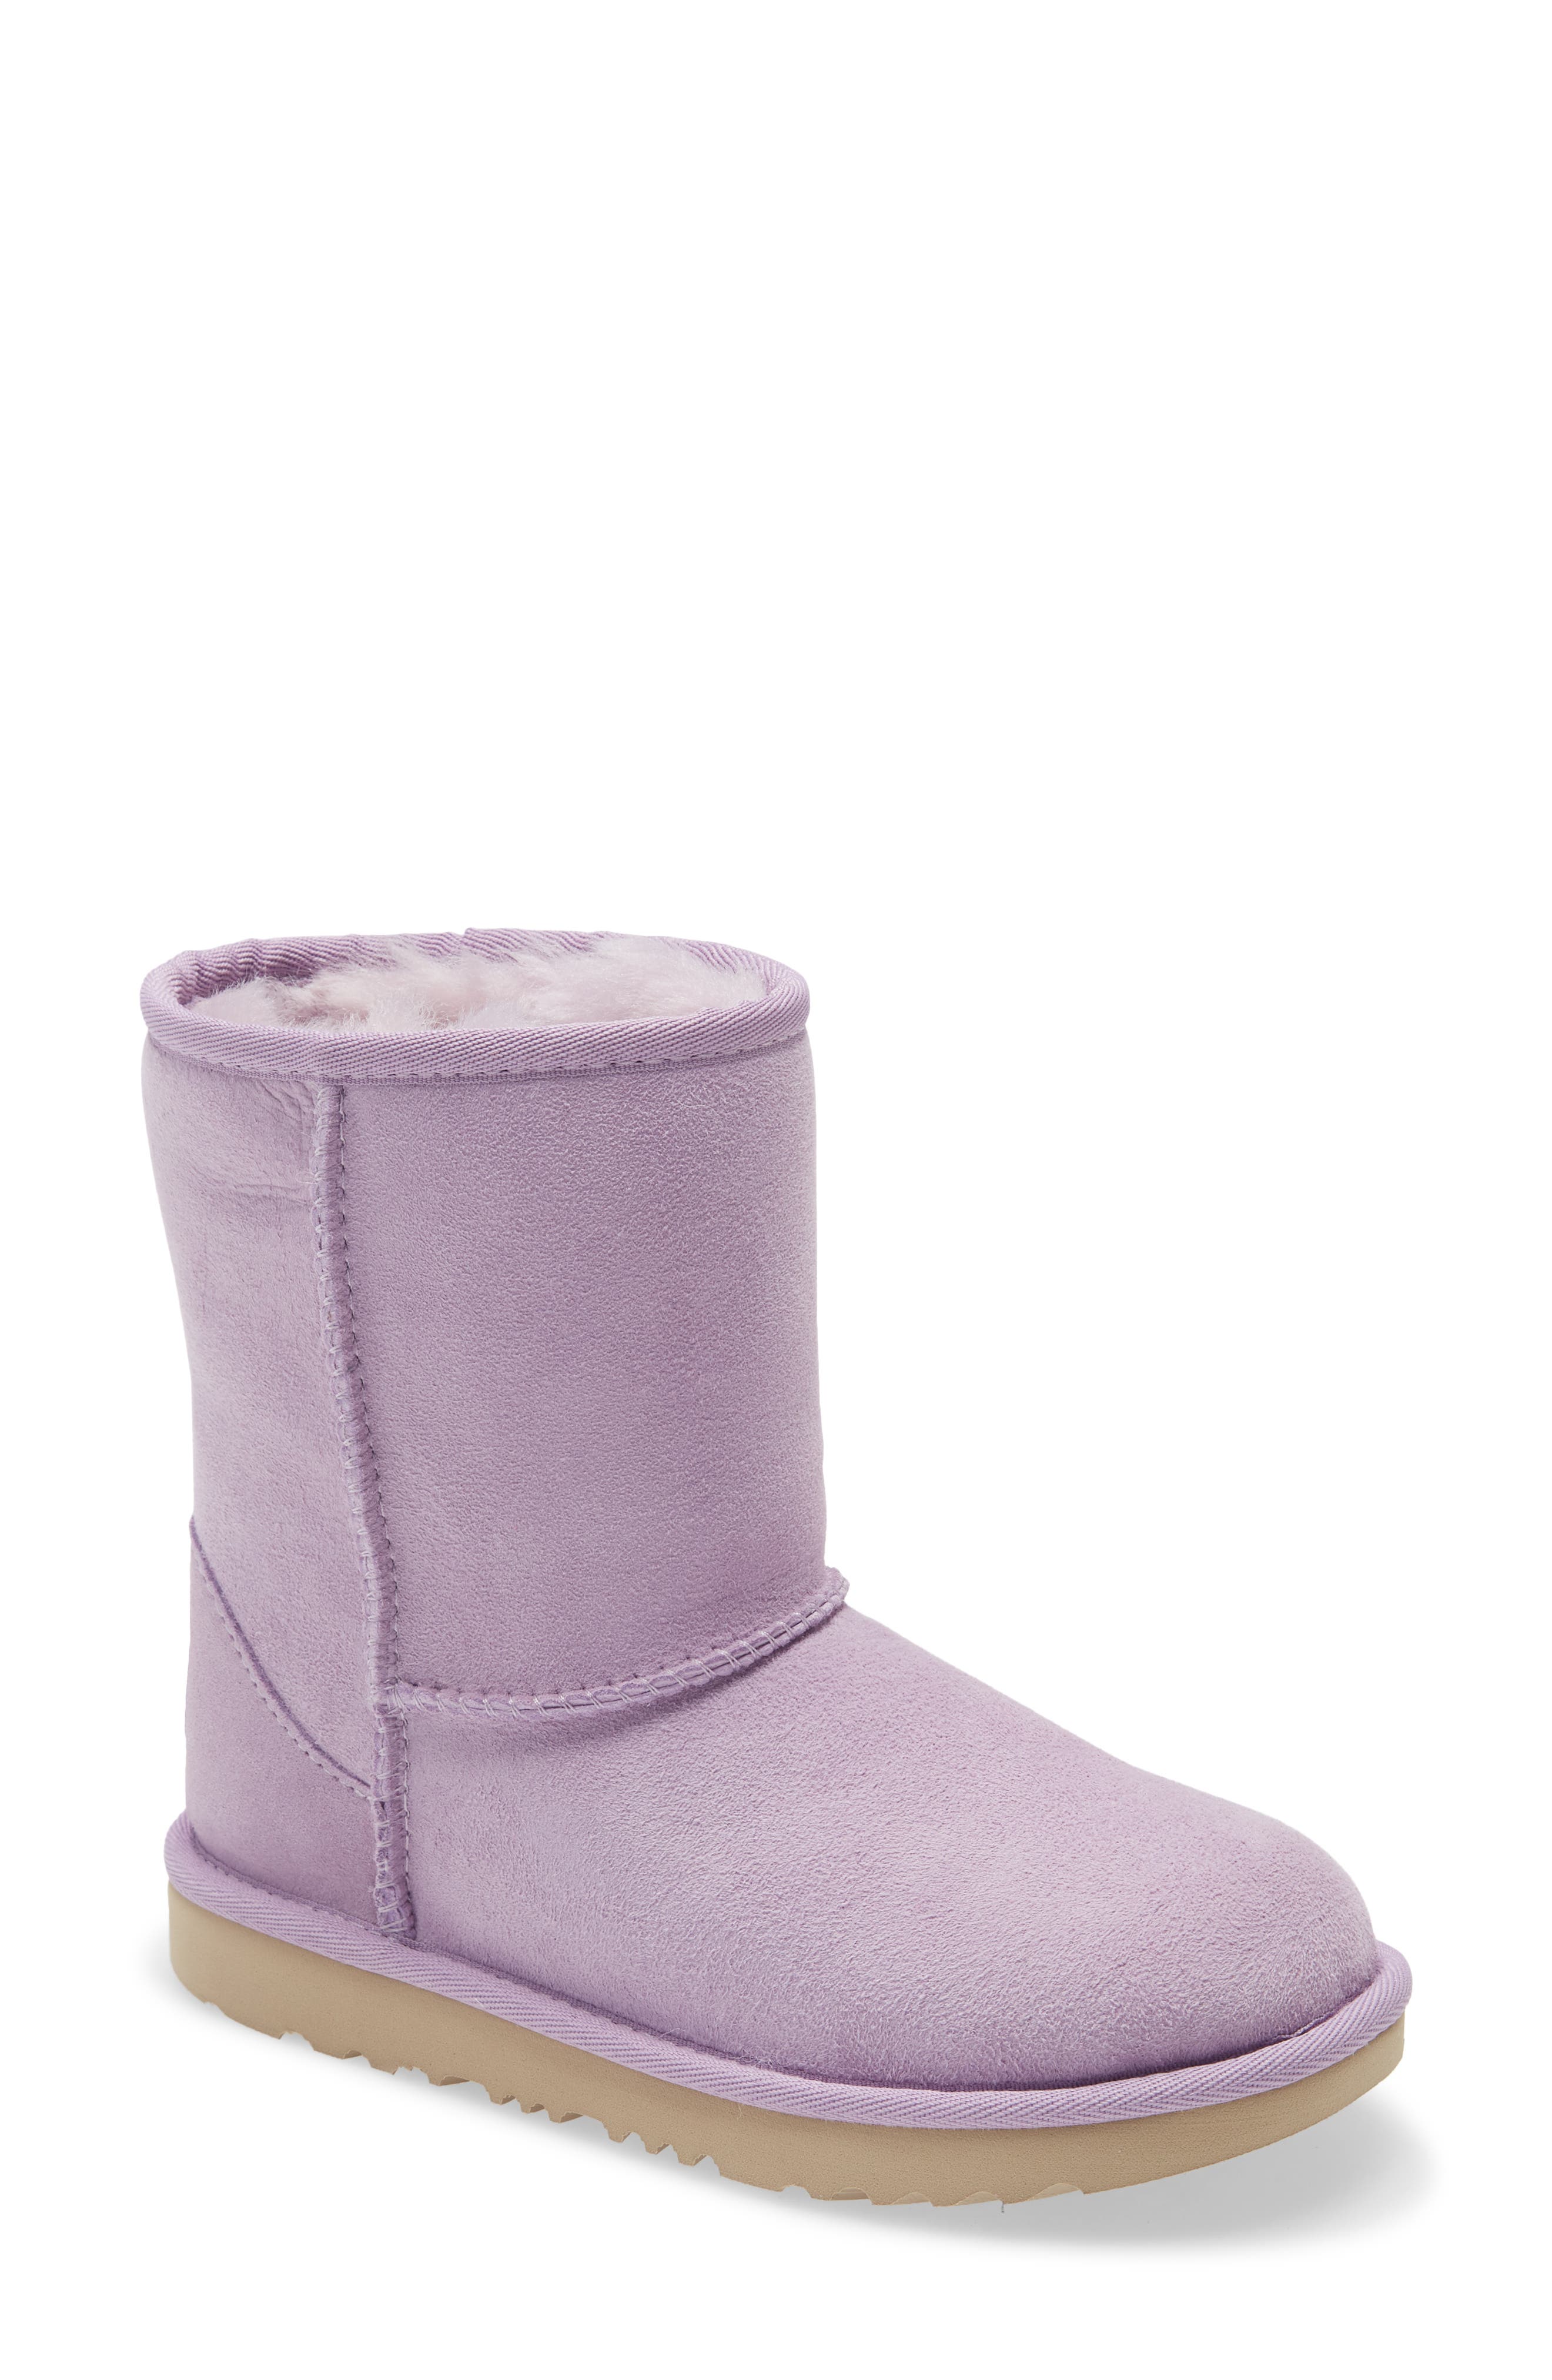 Girls' Purple Shoes